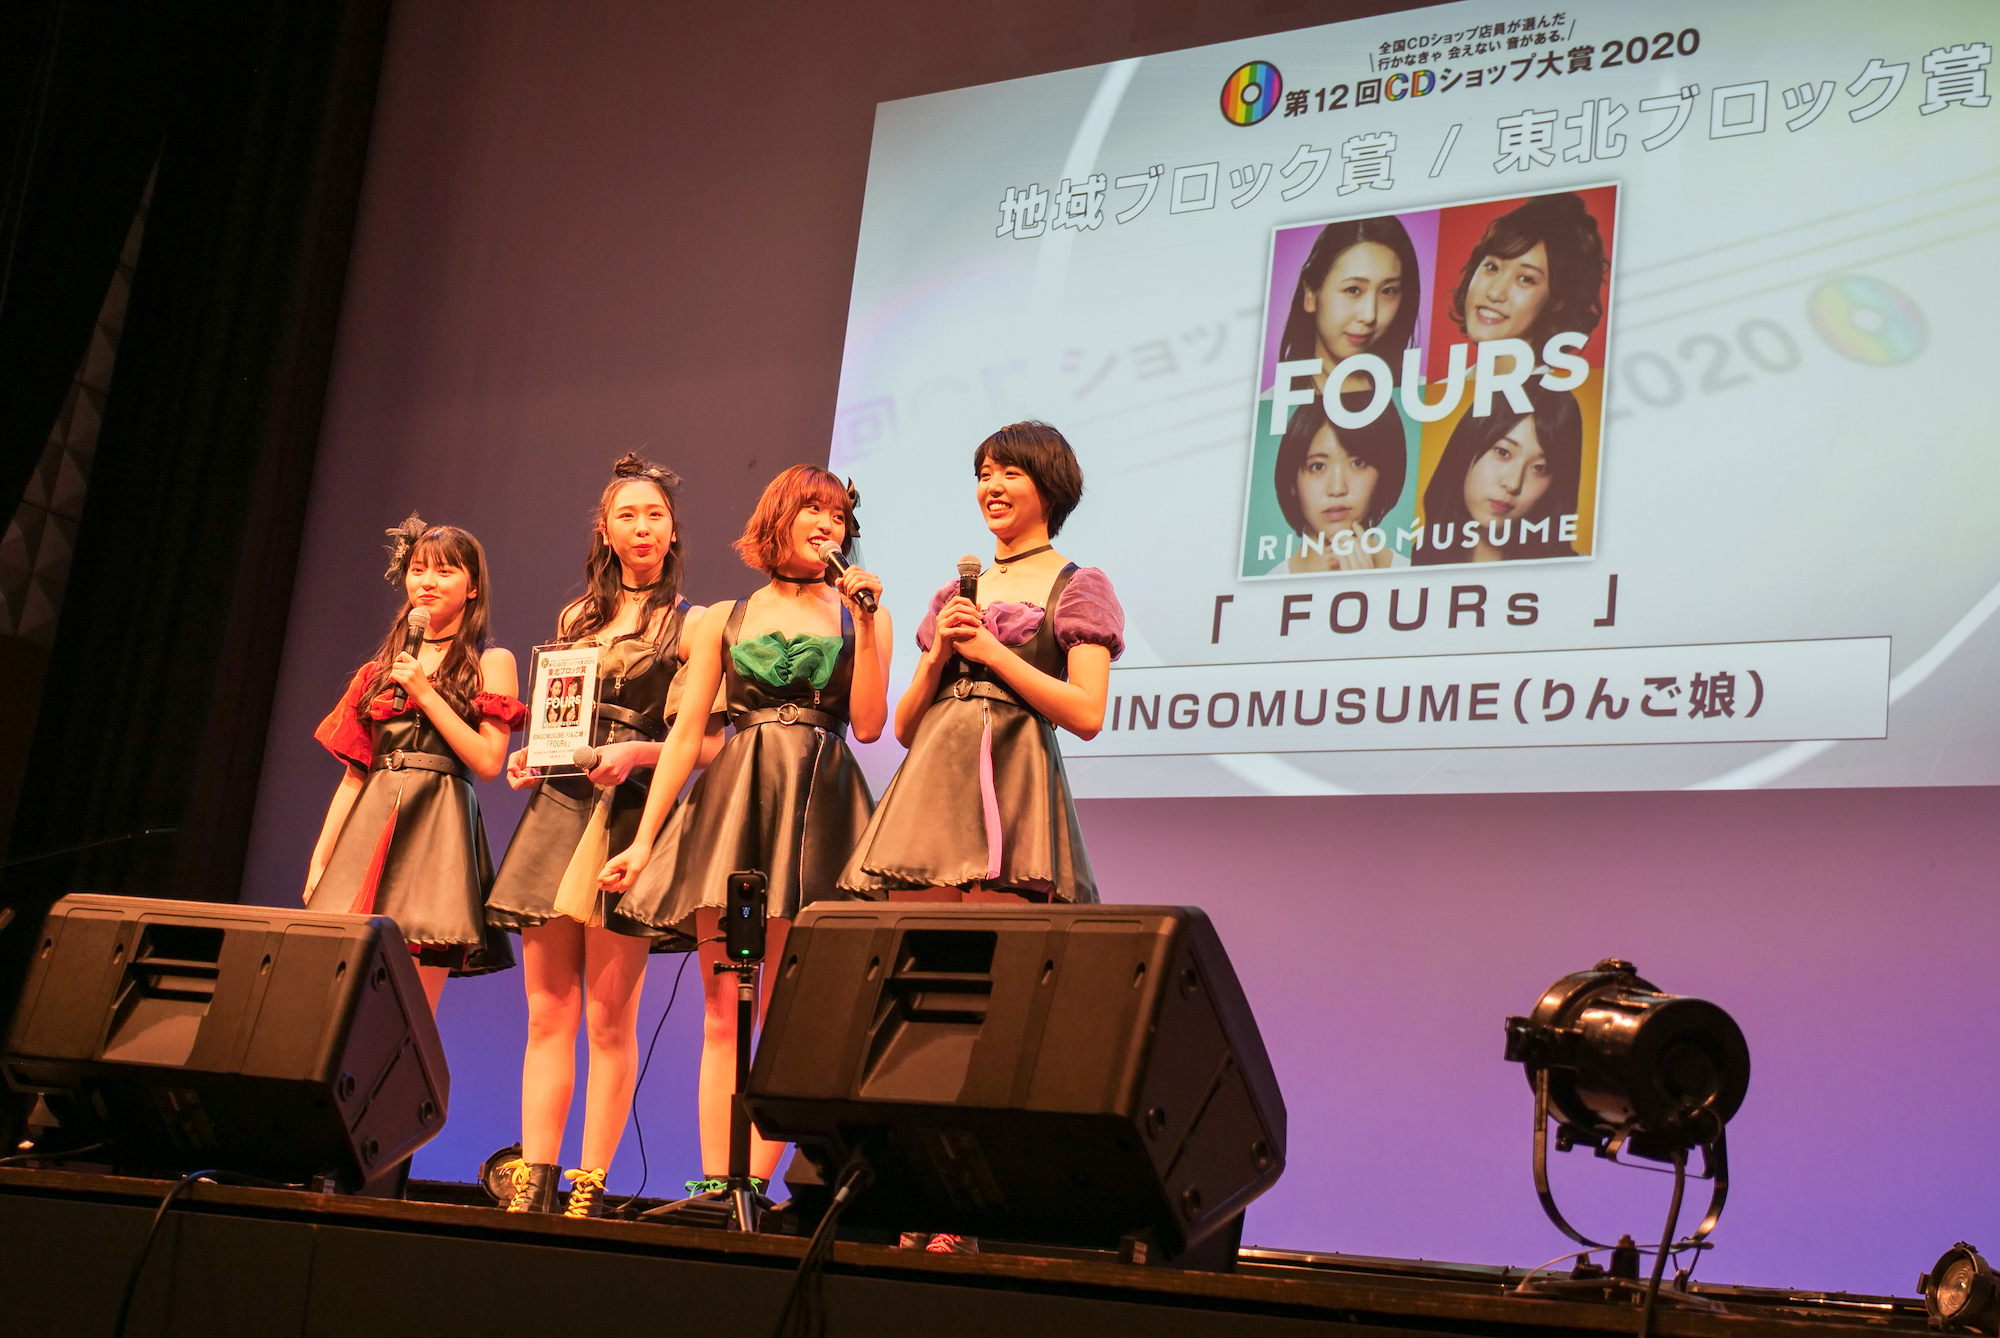 RINGOMUSUME、「第12回CDショップ大賞2020」アルバム「FOURs」が東北ブロック賞 受賞